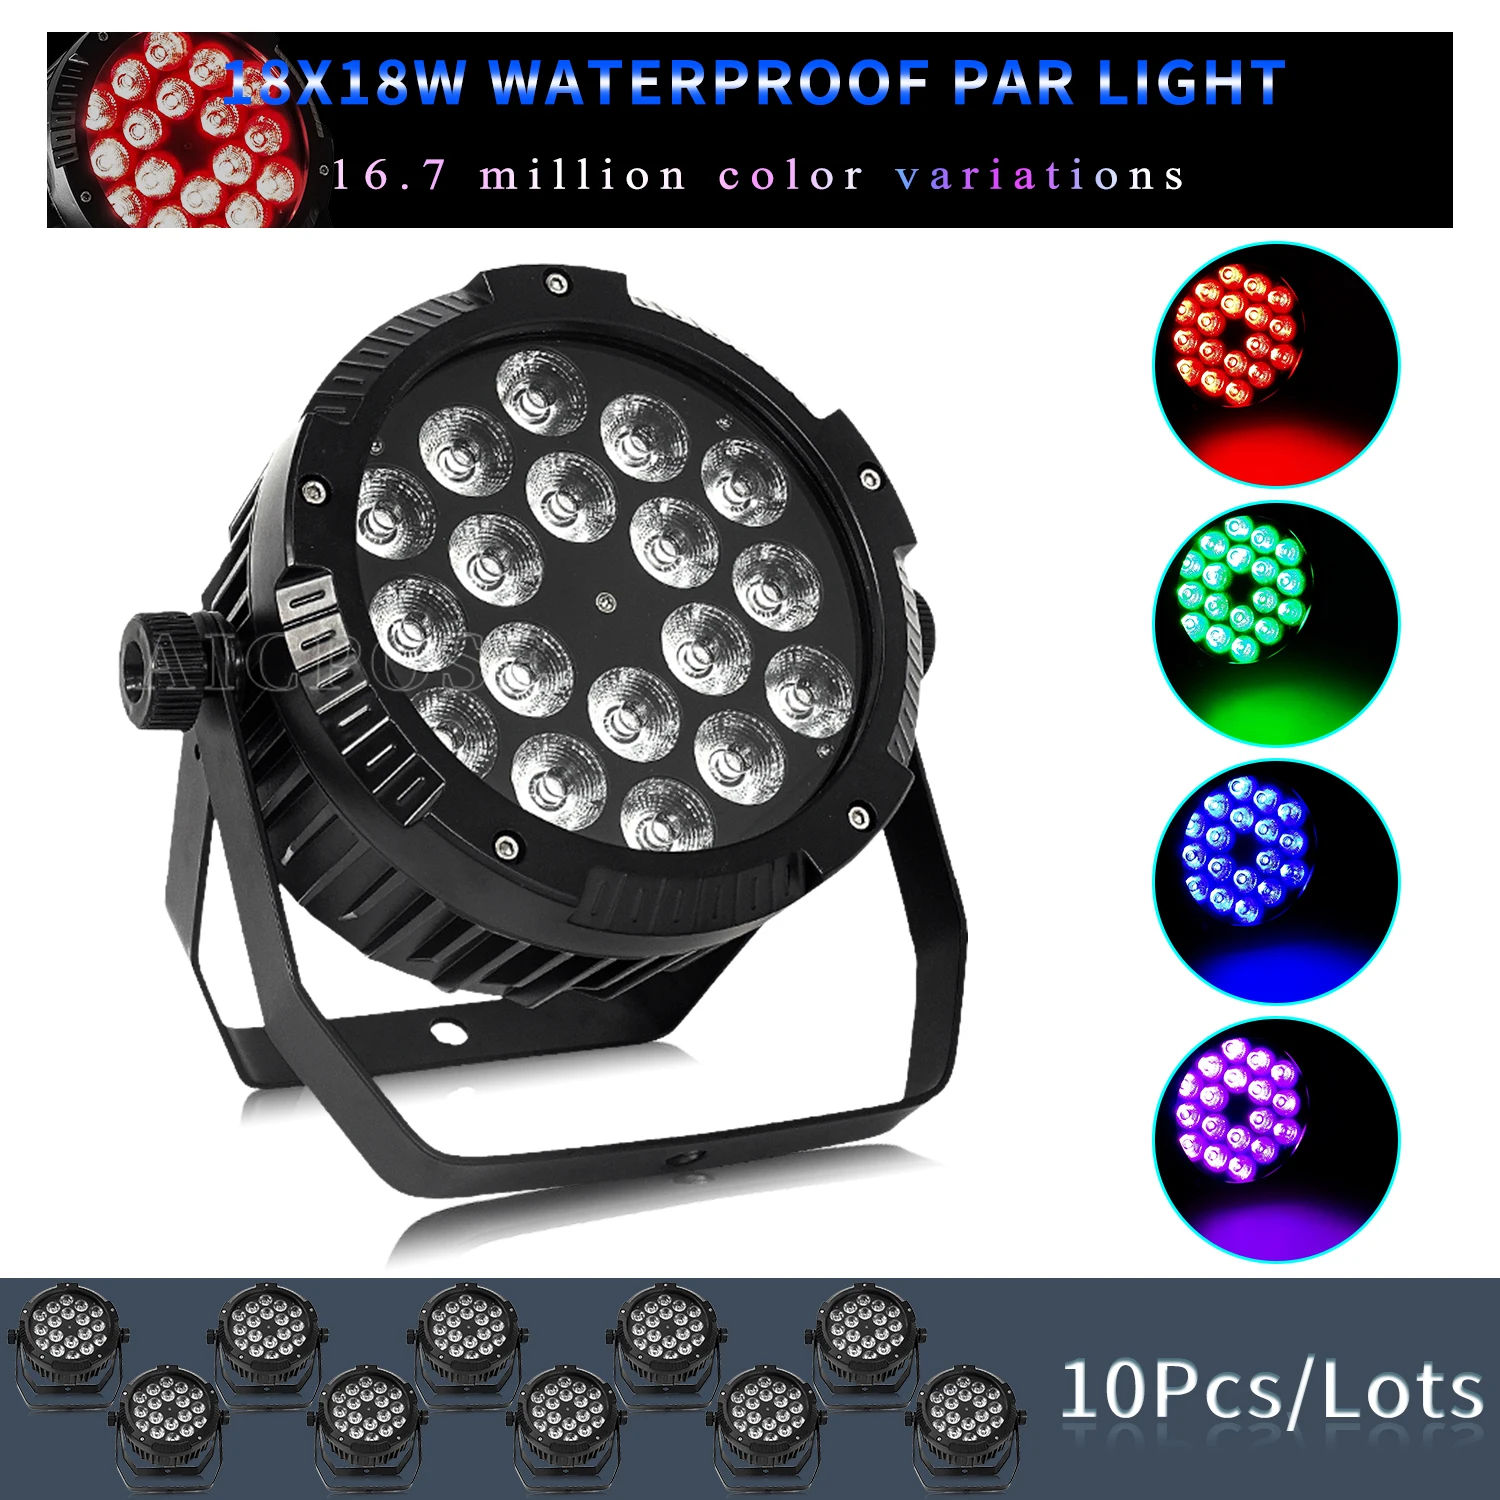 

10Pcs/Lots 18x12W RGBW/18x18W RGBWA UV 6 in 1 LED Waterproof Par Light DMX Control DJ Disco Outdoor Stage Show Lighting